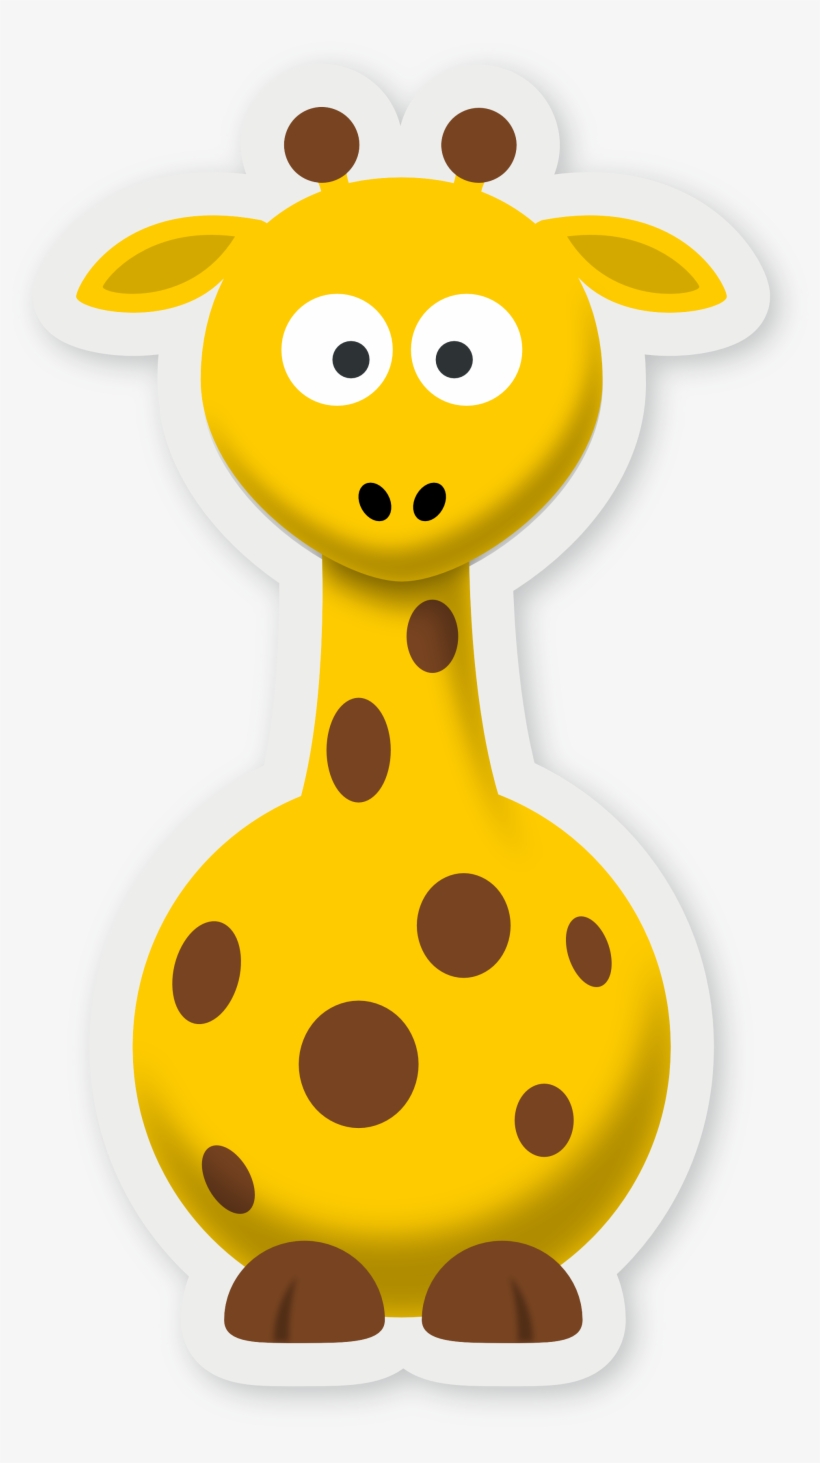 Pics Of Cartoon Giraffes - Cartoon Giraffe With Transparent Background, transparent png #2916239